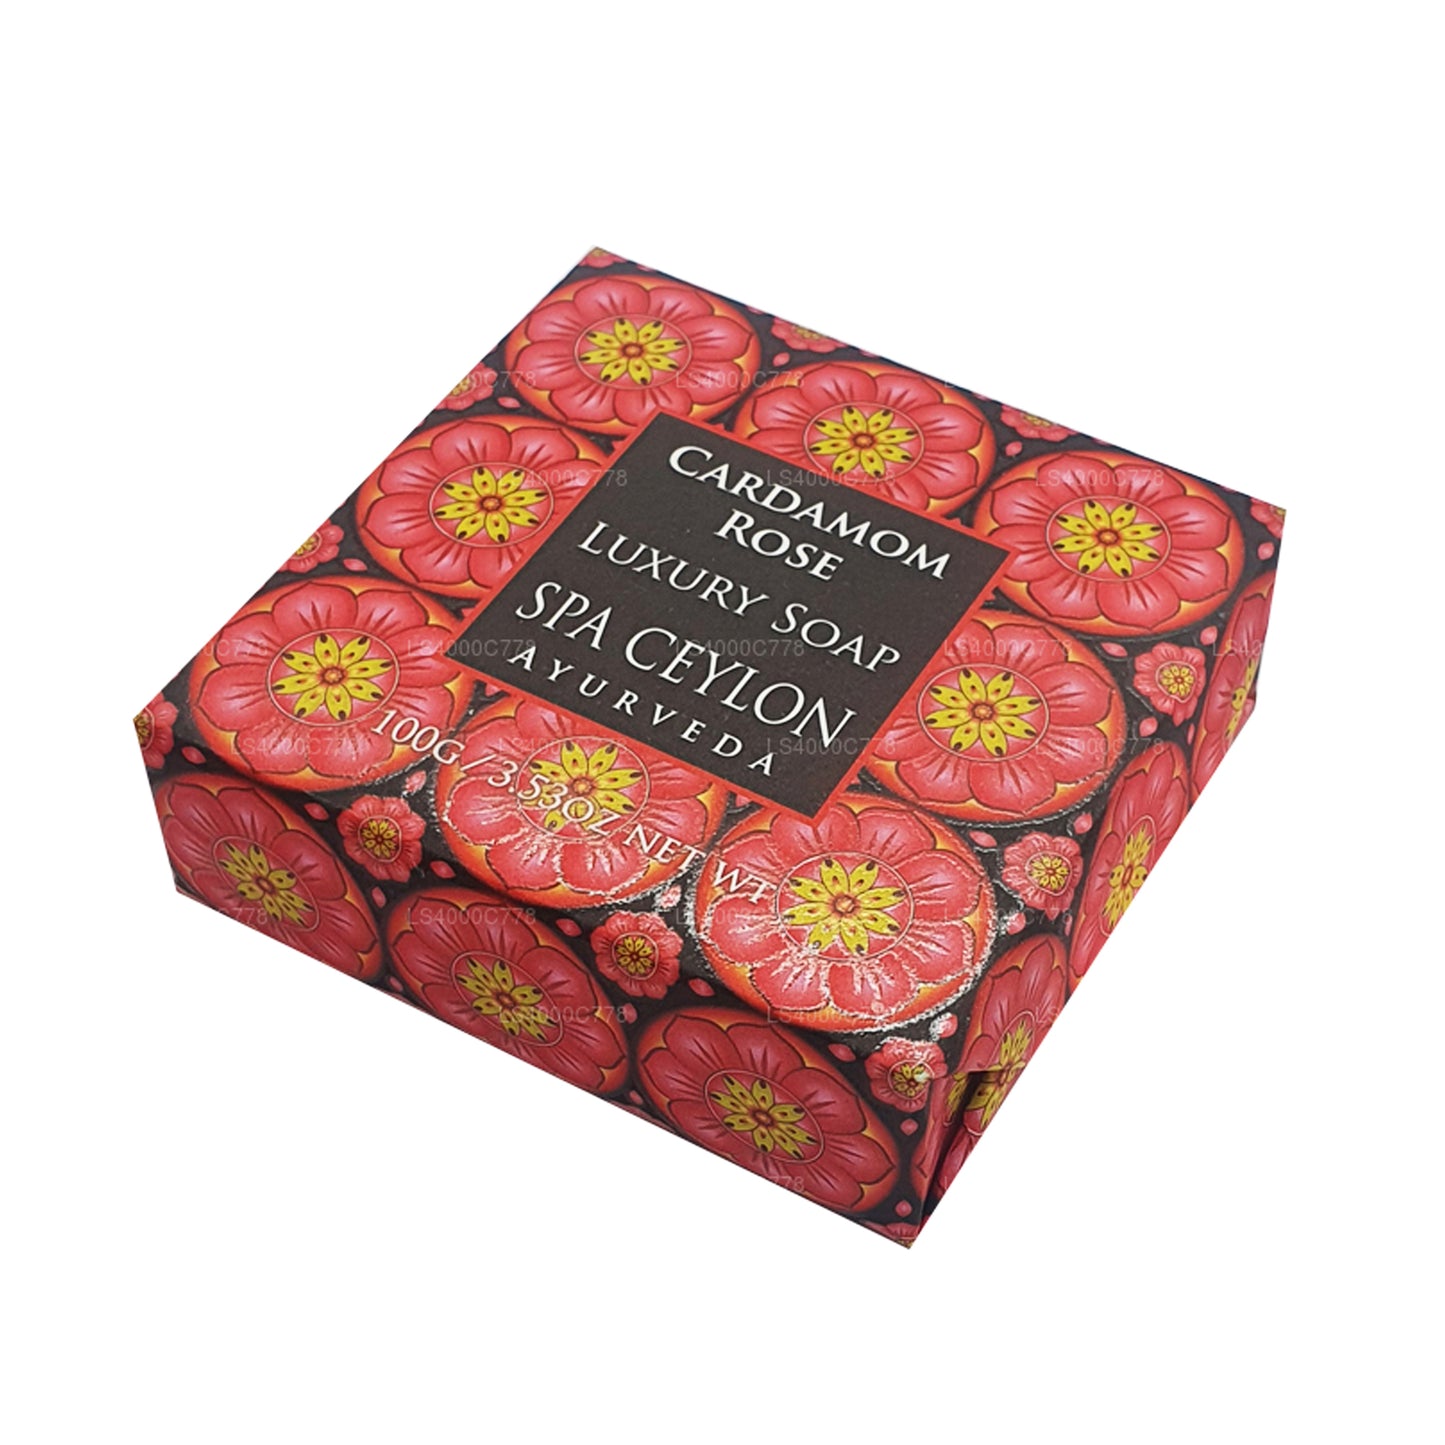 Jabón de lujo Spa Ceylon Cardamom Rose (100 g)